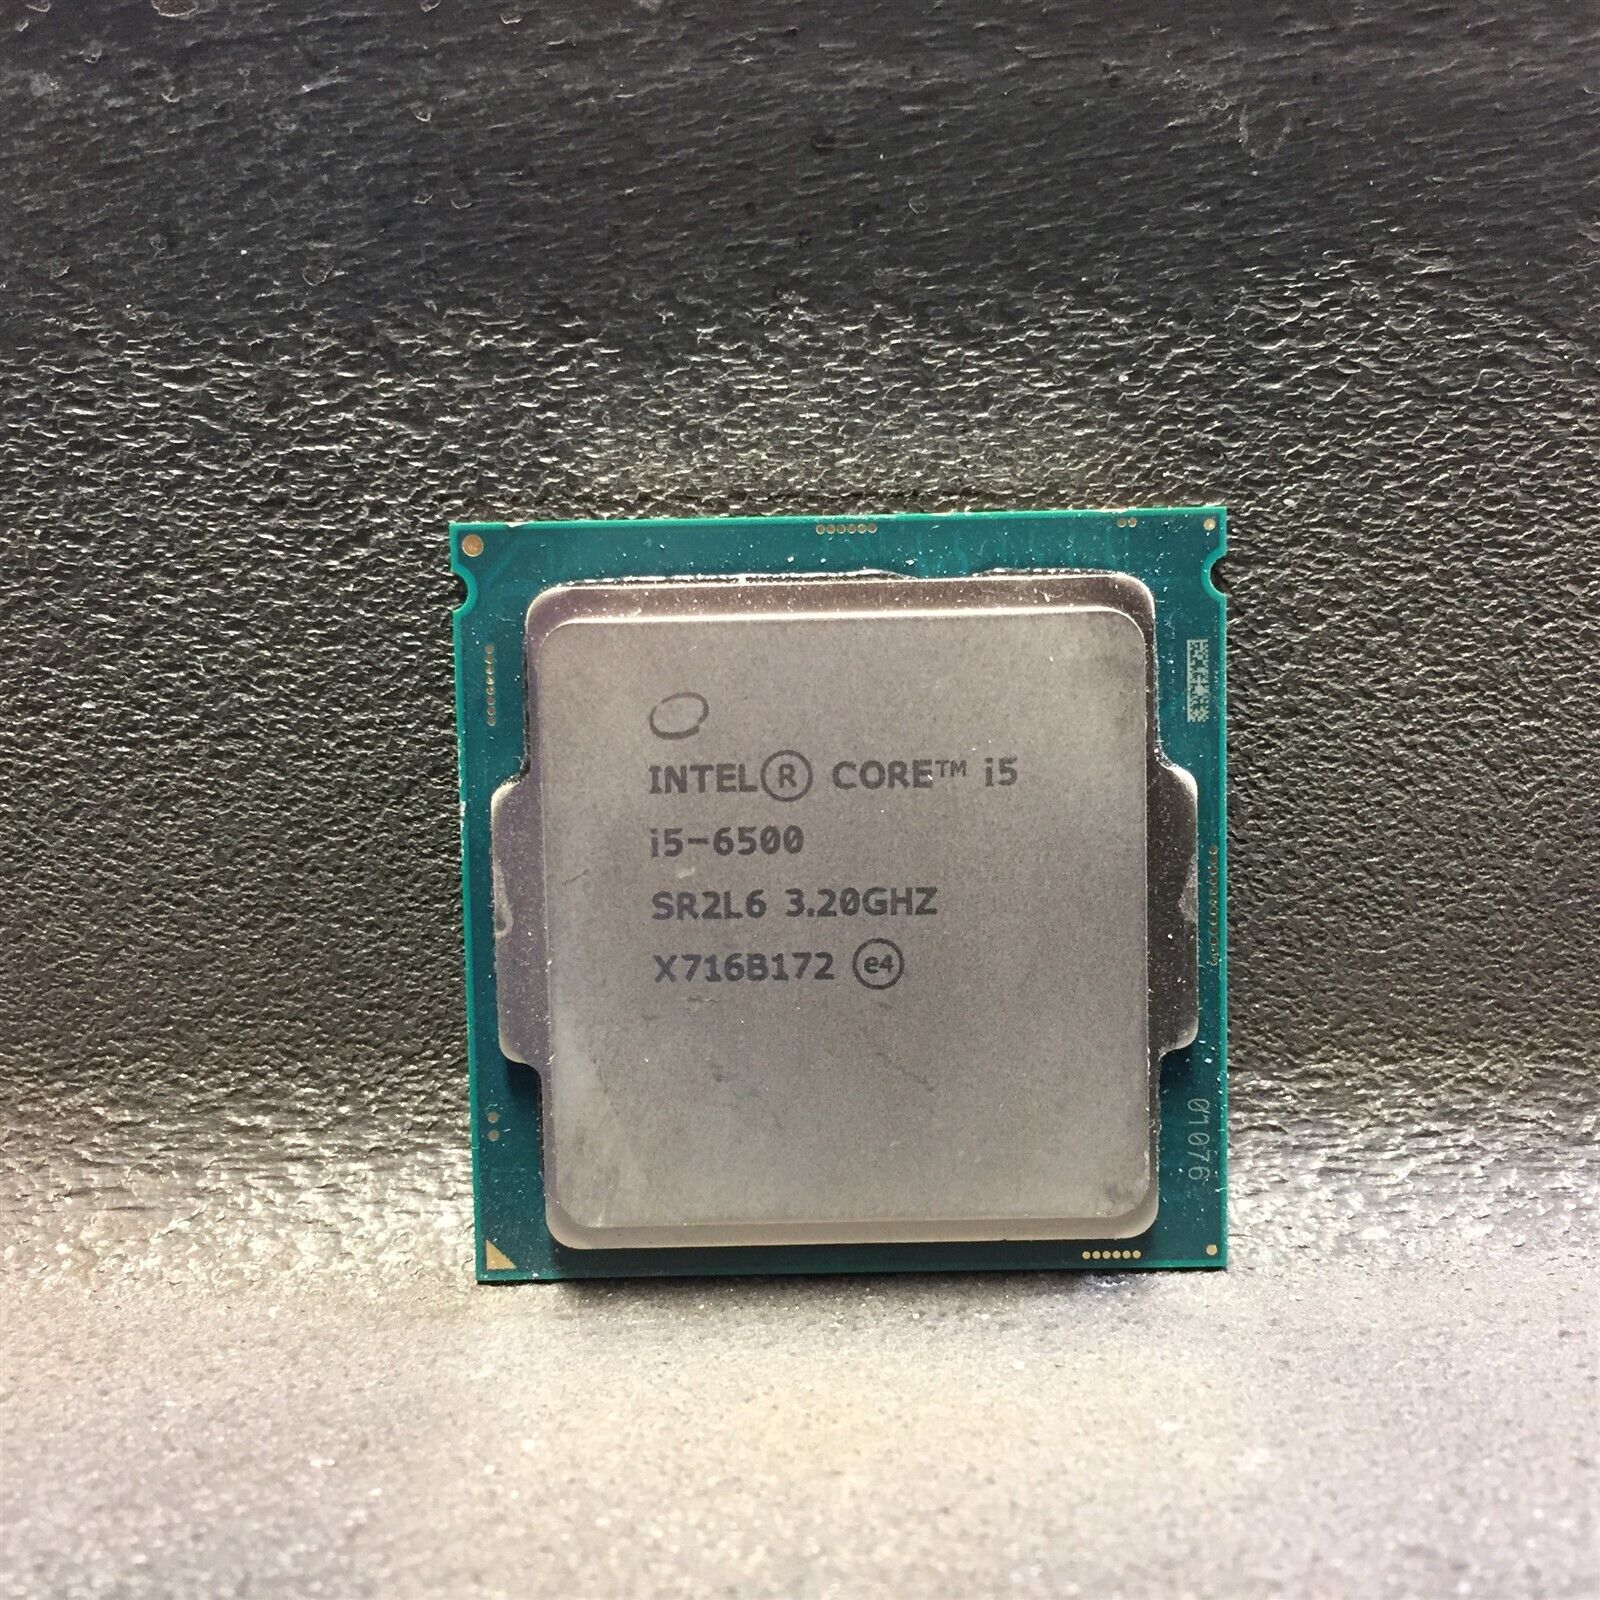 Intel Core i5-6500 SR2L6 3.20GHz Quad Core LGA1151 6MB Processor CPU Tested